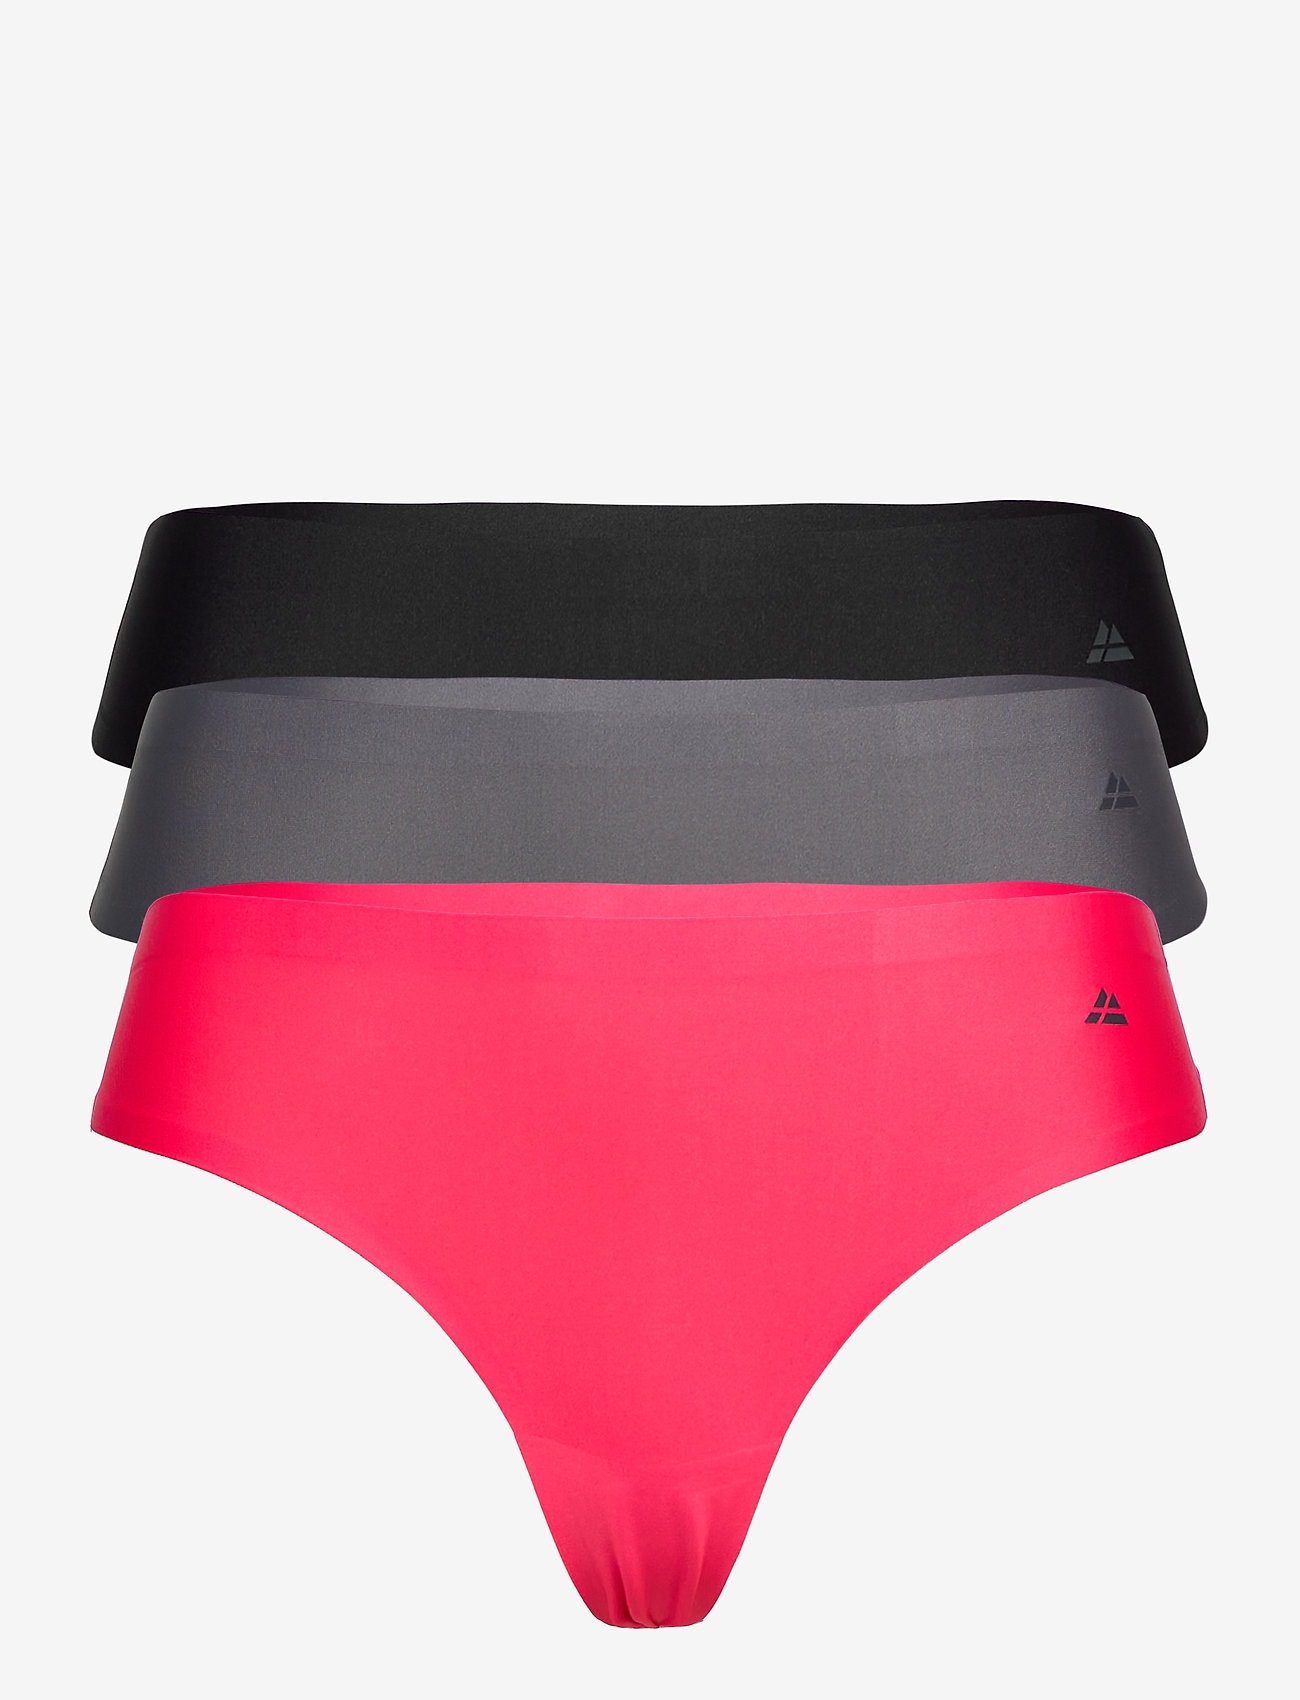 Danish Endurance - Women's Invisible Thong - Õmblusteta aluspüksid - multicolor (1 x black, 1 x grey, 1 x pink) - 0